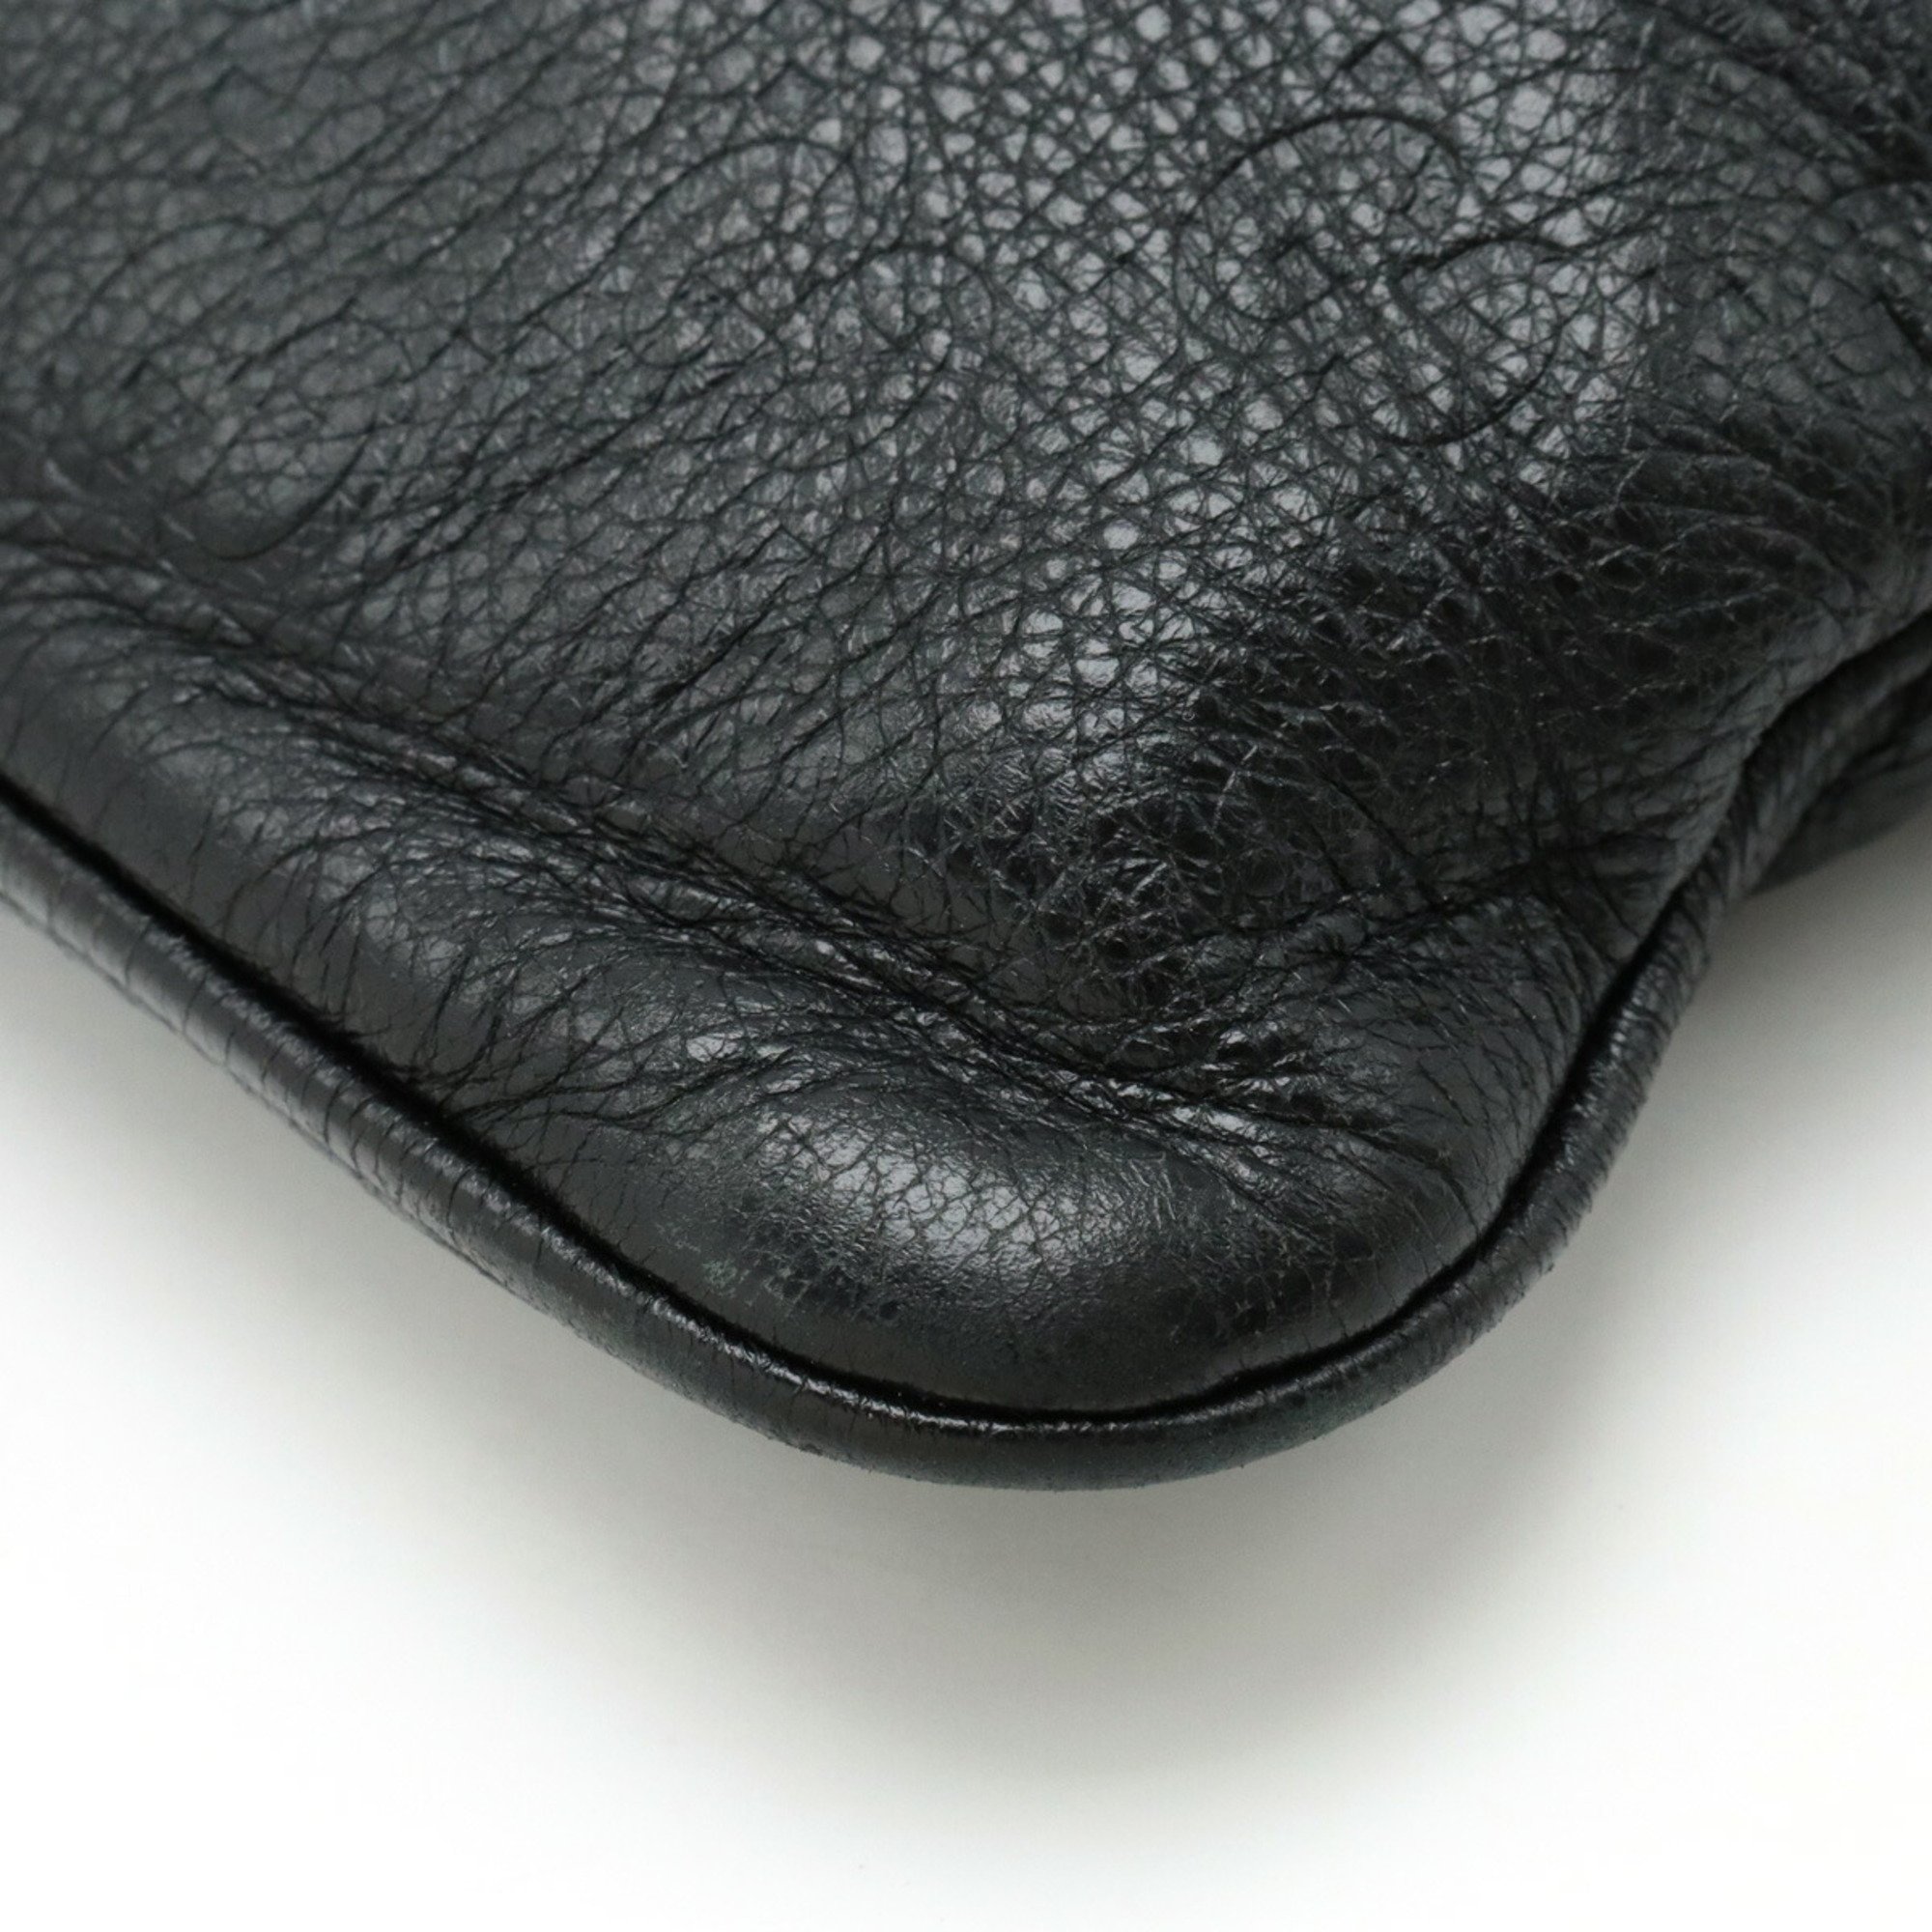 GUCCI Guccissima Shoulder Bag Crossbody Leather Black 201446